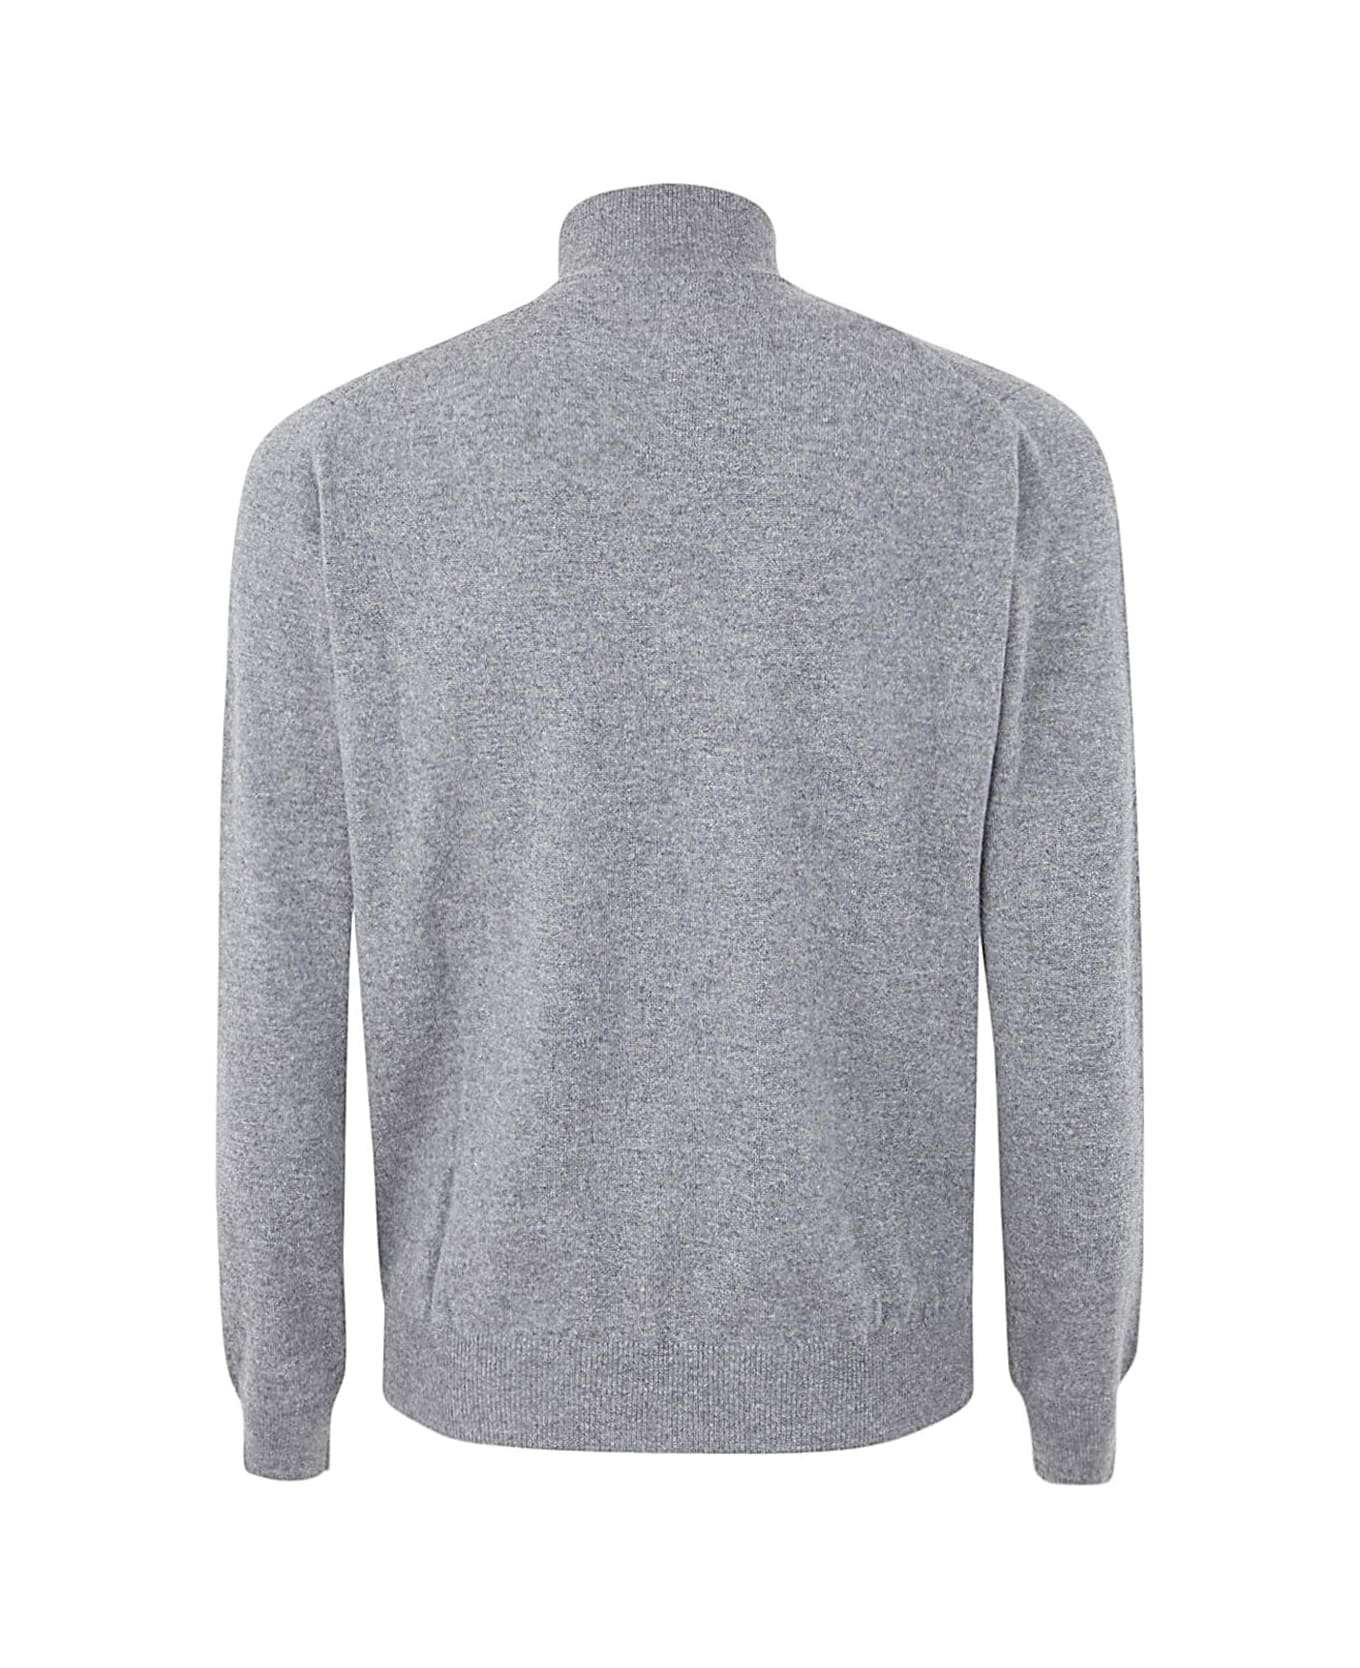 Filippo De Laurentiis Wool Cashmere Long Sleeves Half Zipped Sweater - Grey